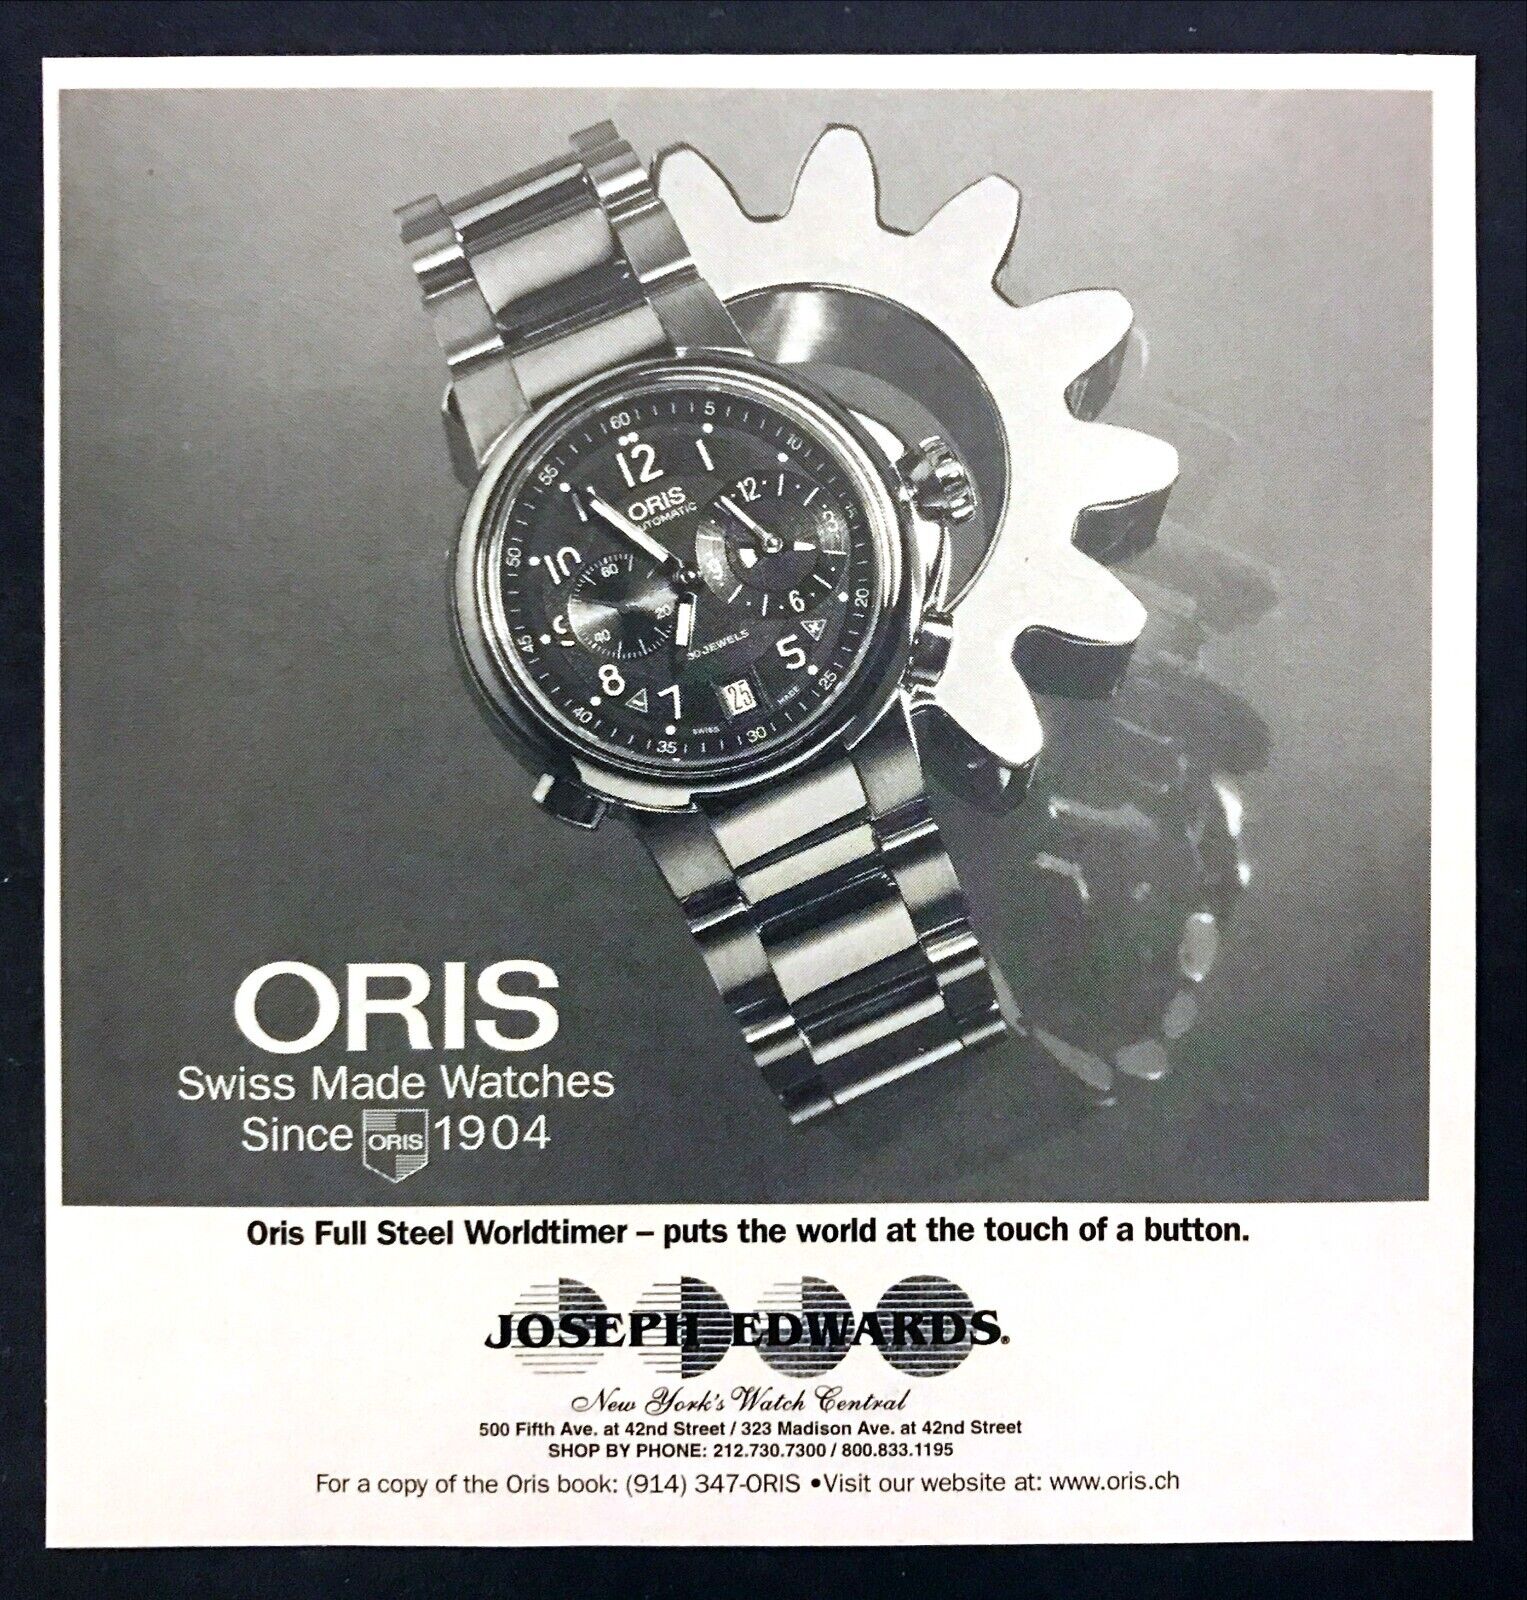 1998 Oris Full Steel Worldtimer Watch photo Joseph Edwards NYC vintage print ad